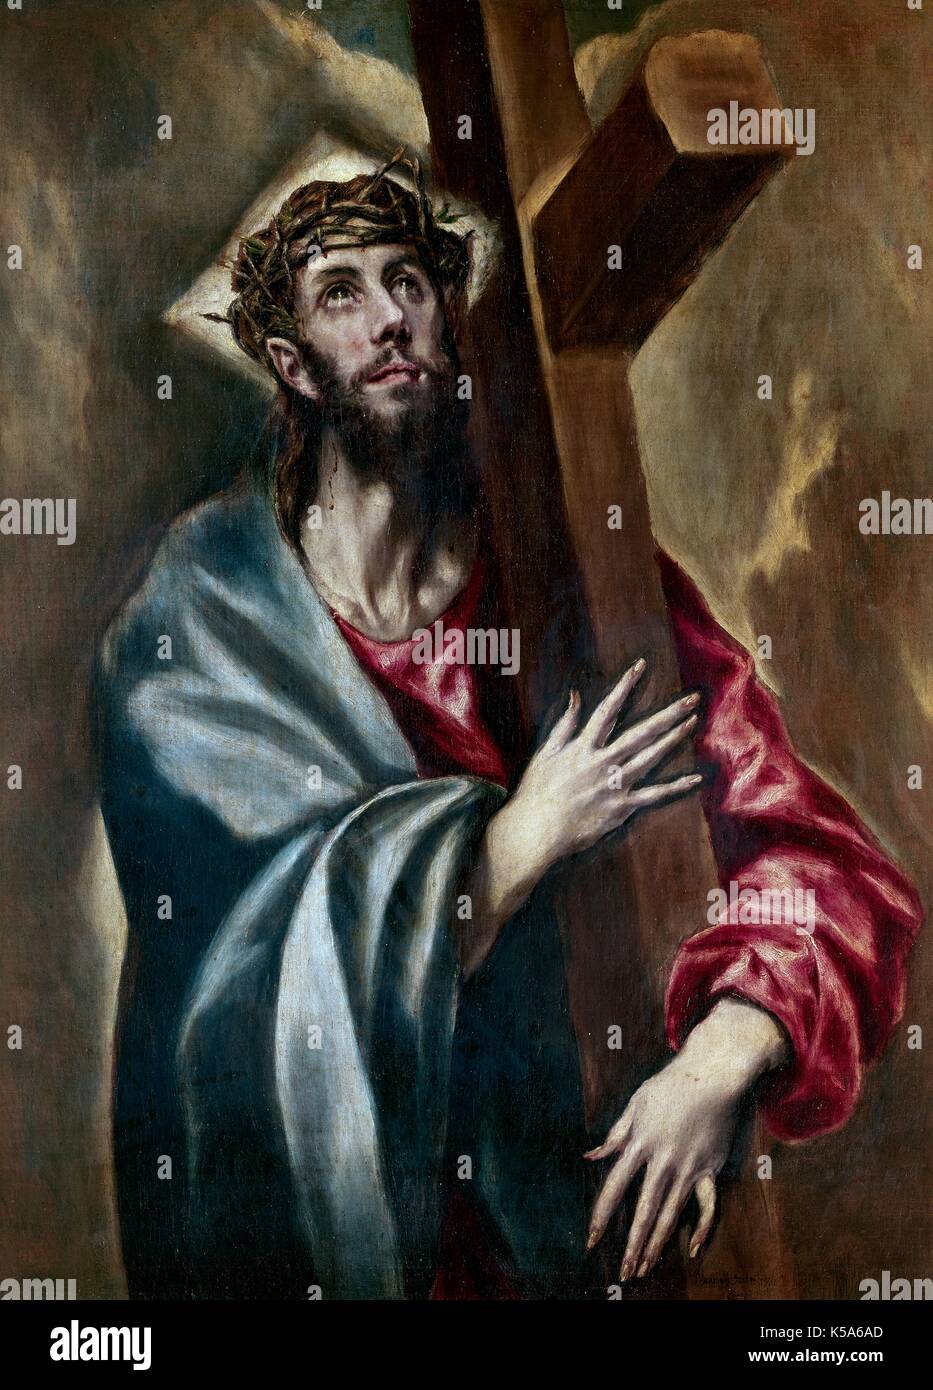 El Greco (Domenikos Theotokopoulos) (1541-1614). Manierismus, späten Renaissance. Das Kreuz Christi (ca. 1602). Öl auf Leinwand. Museo del Prado (Madrid, Spanien). Stockfoto